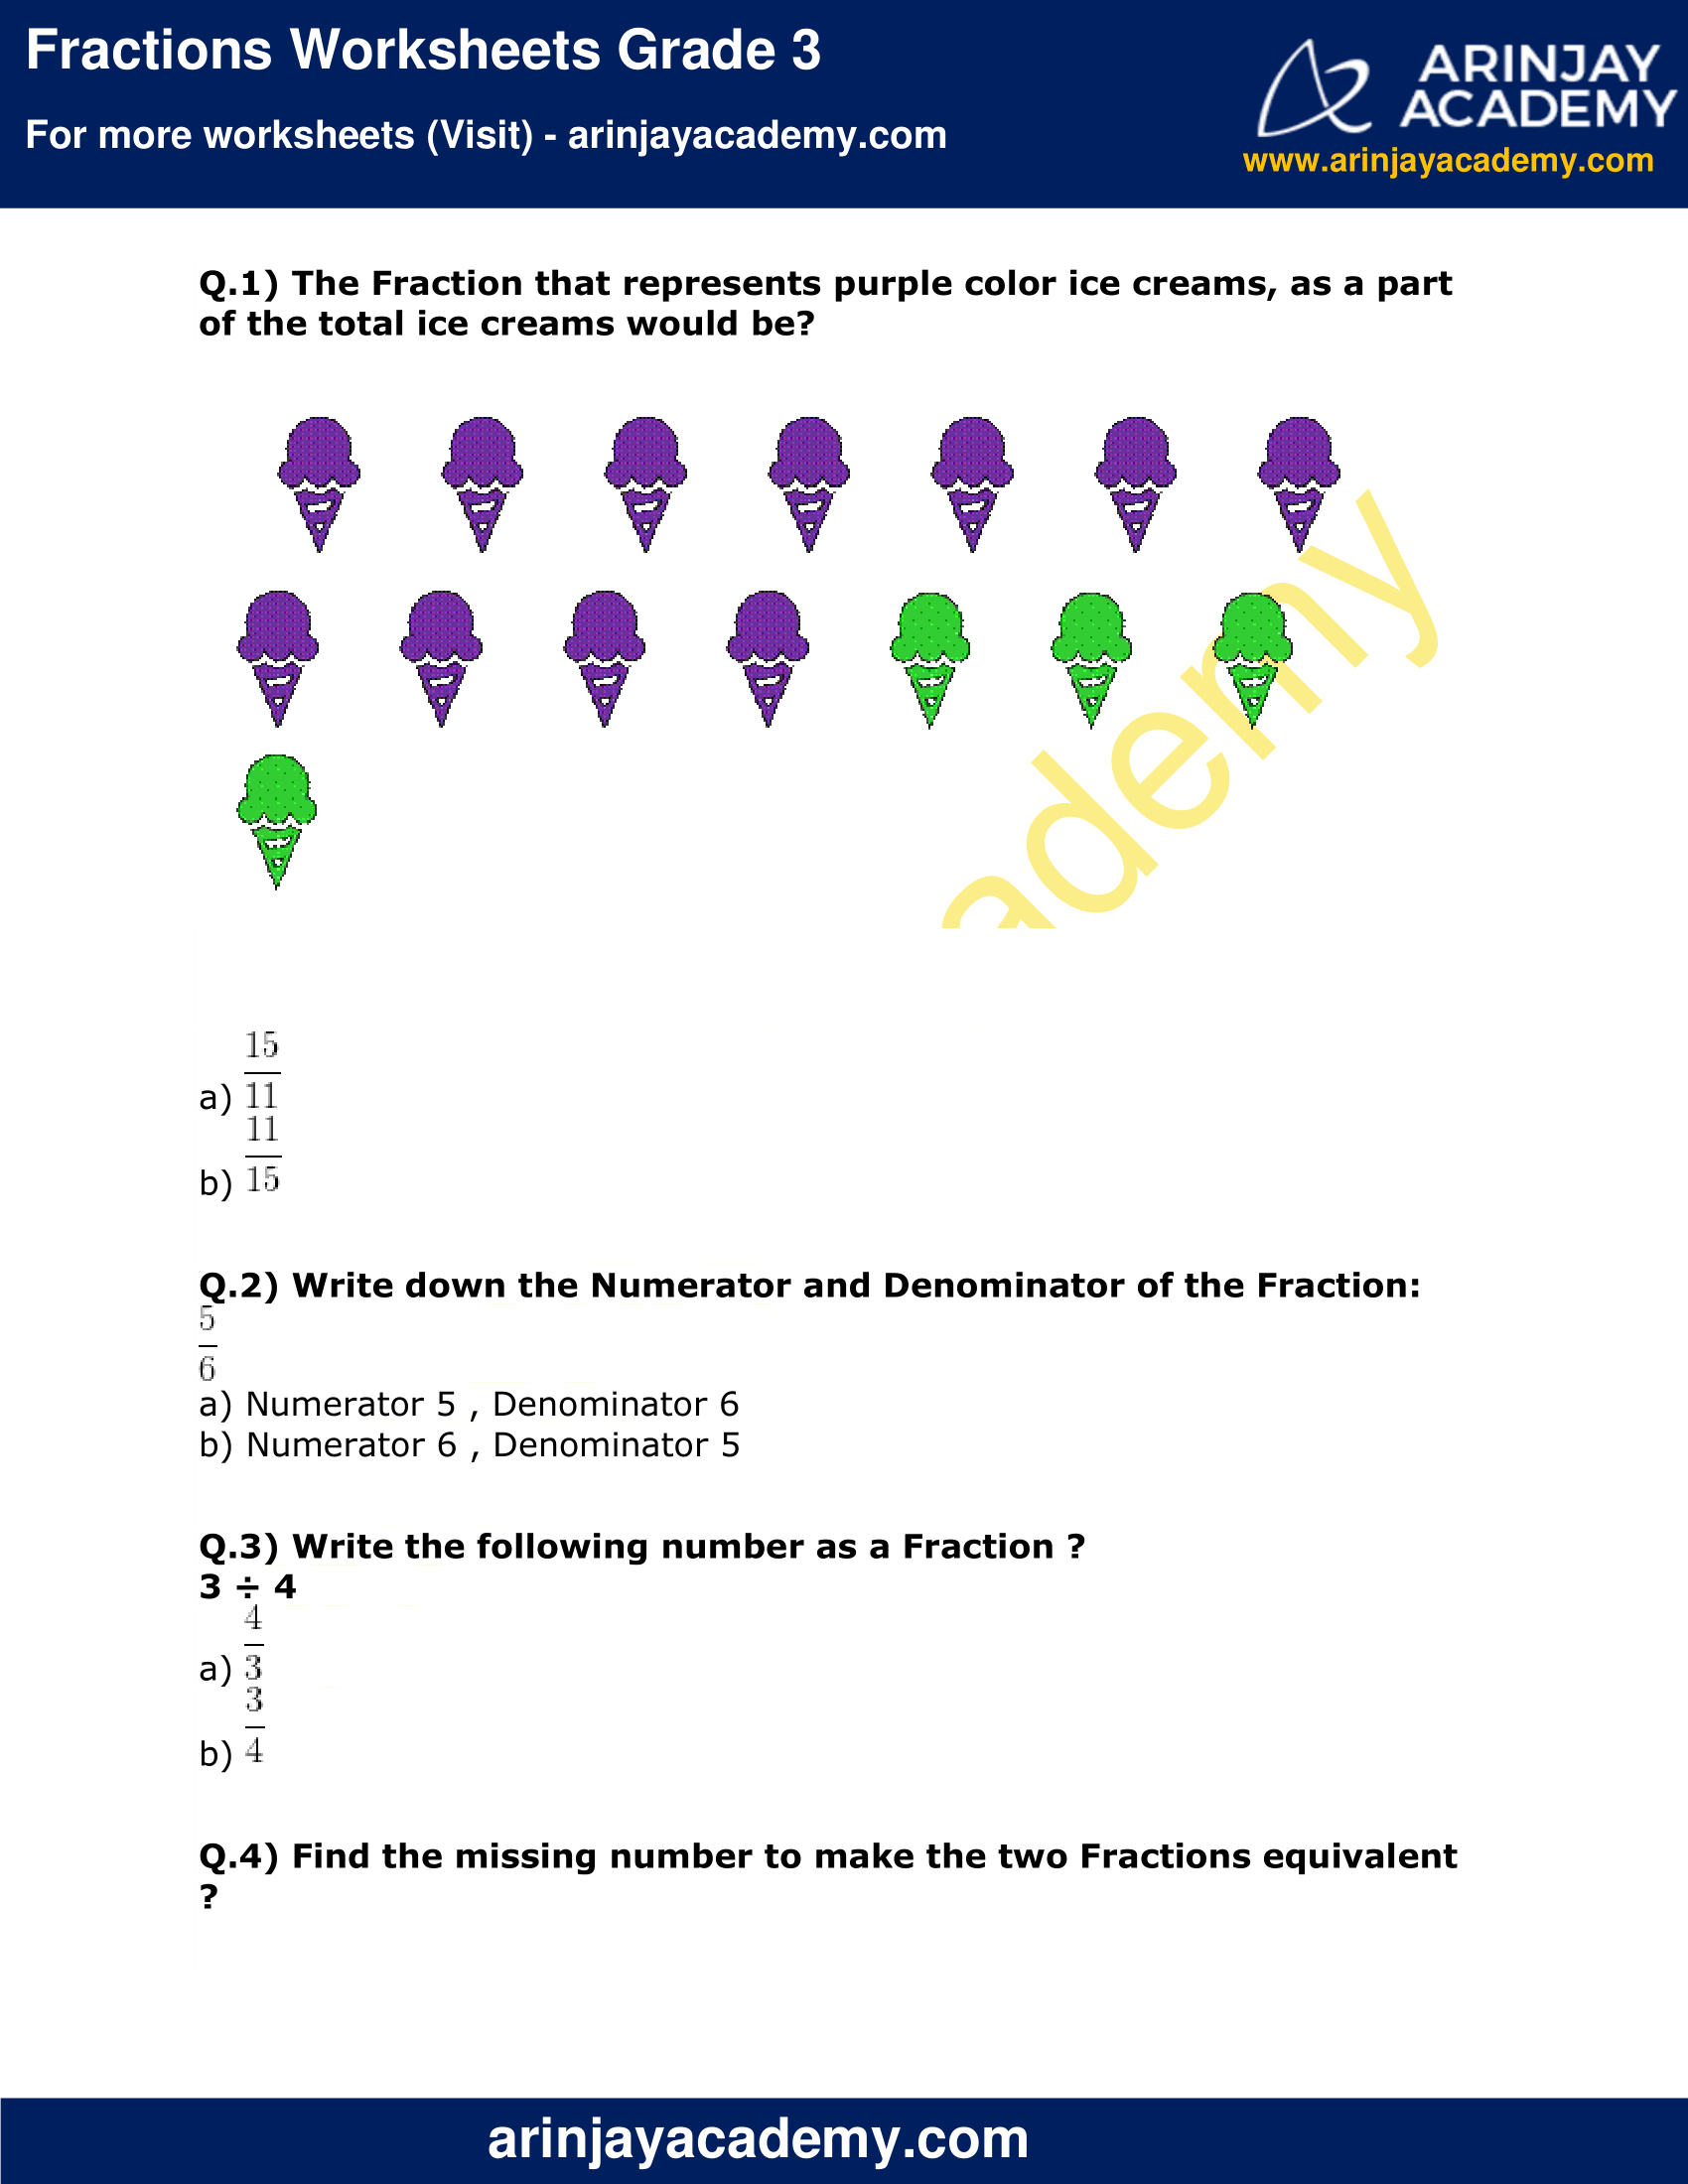 fractions-worksheets-grade-3-maths-arinjay-academy